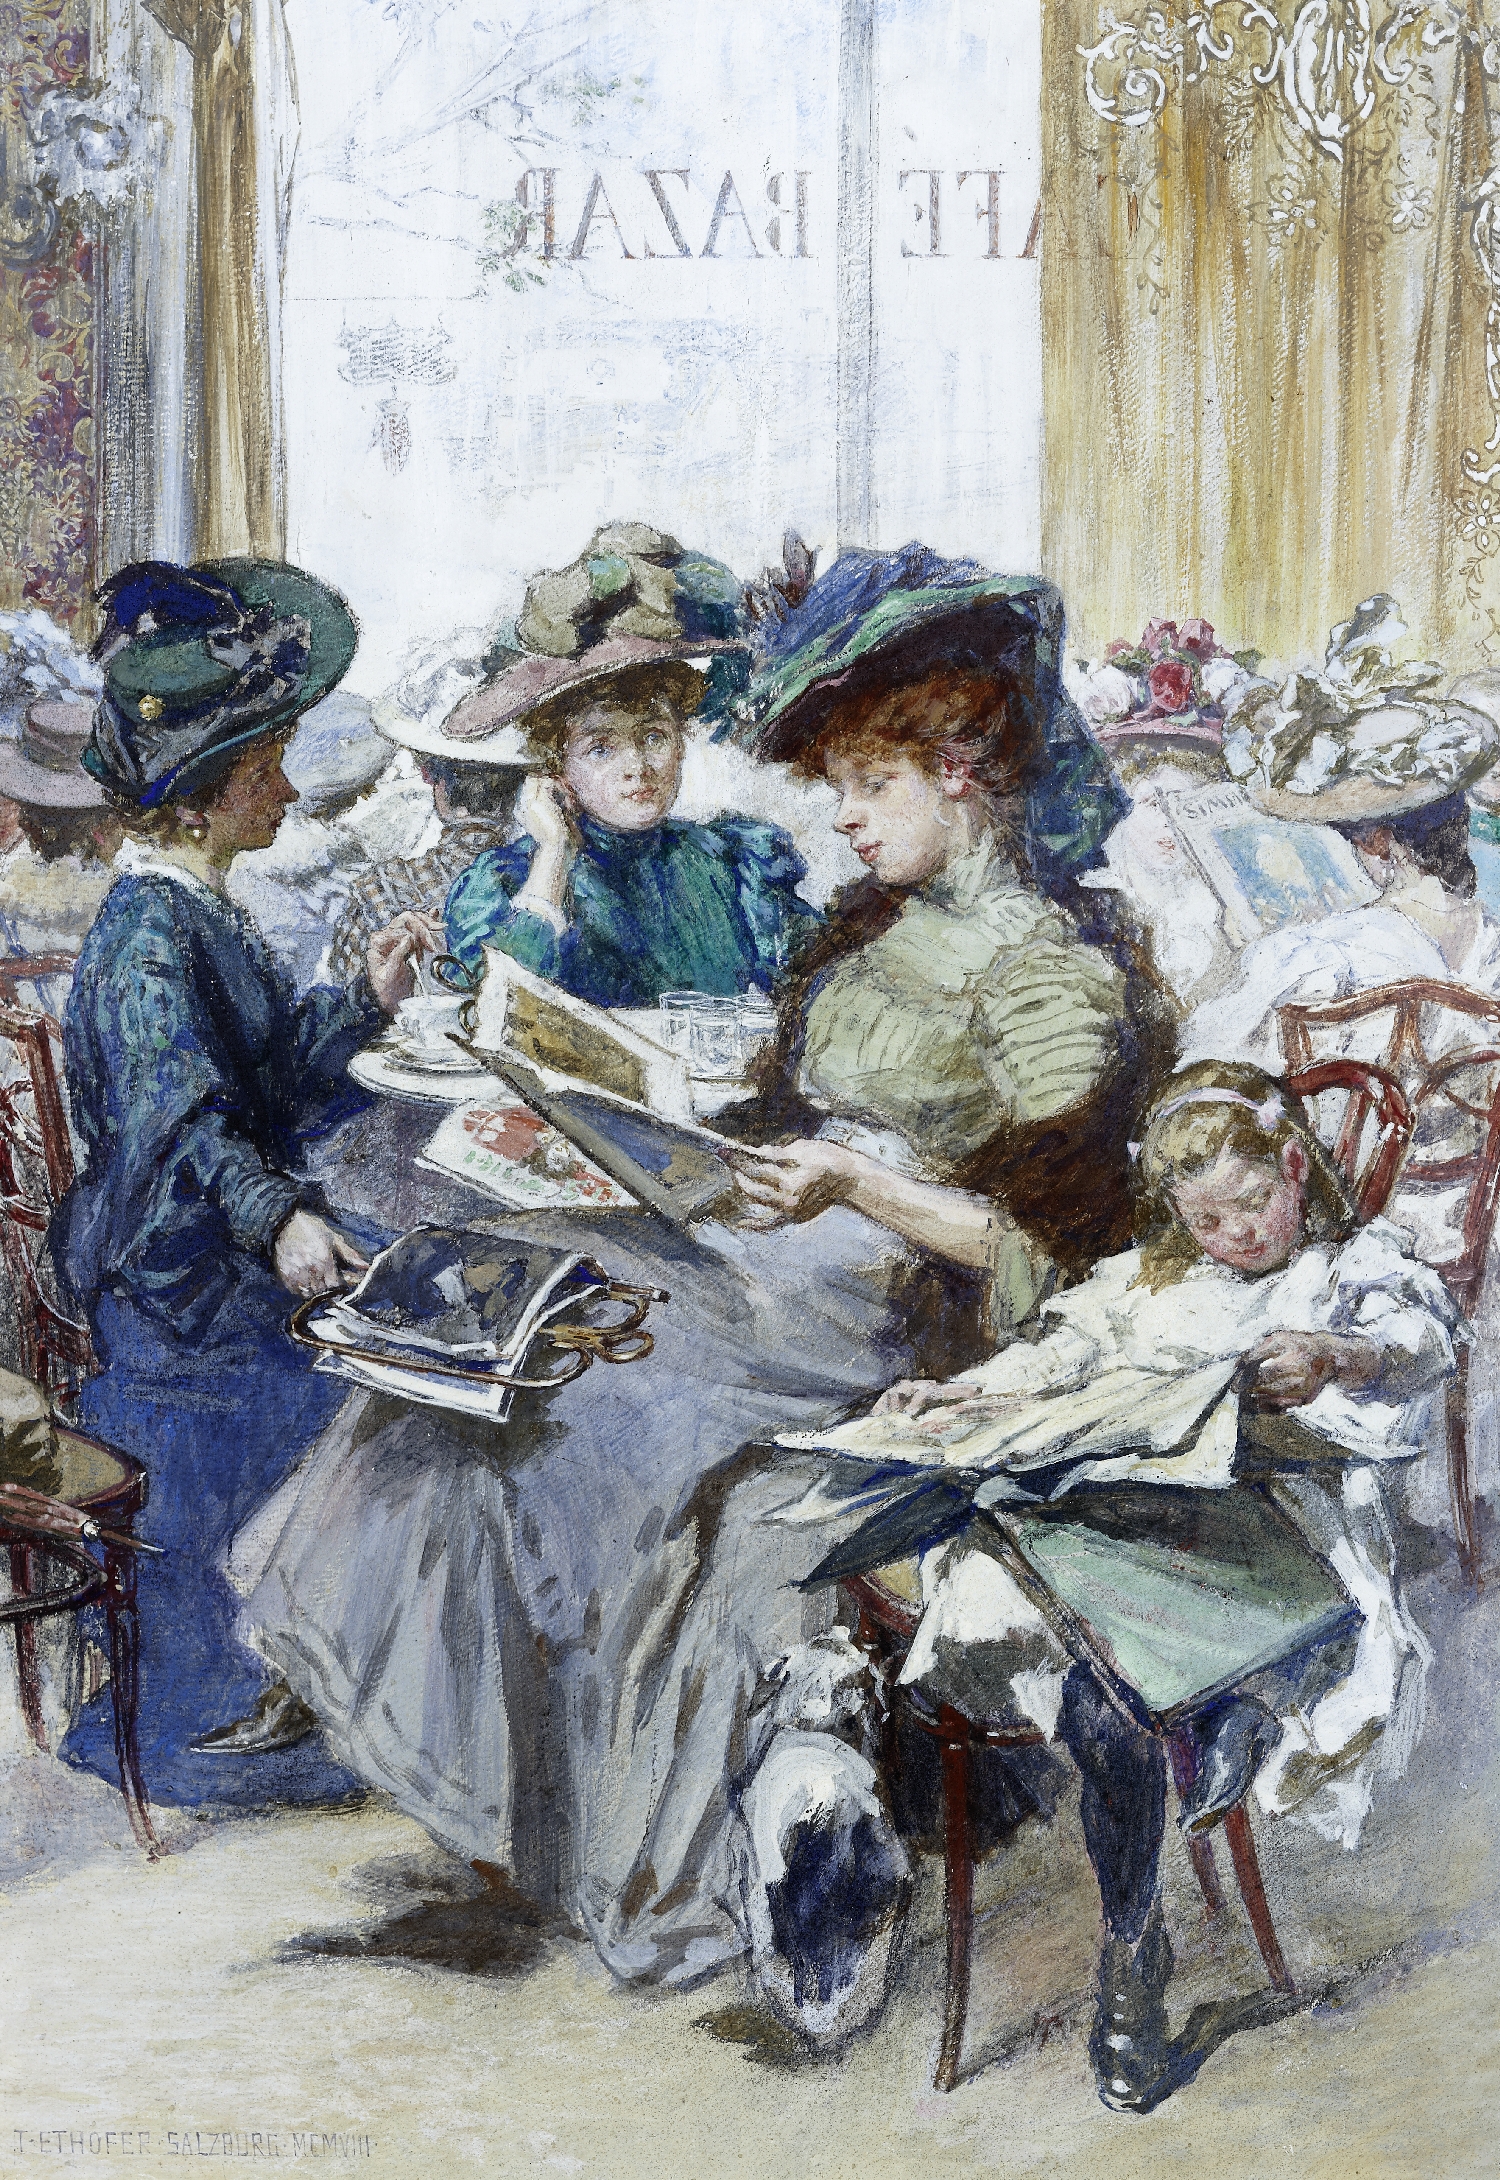 Ladies in the Café Bazar in Salzburg, Theodor Ethofer, 1908, inv. no. 1015-94